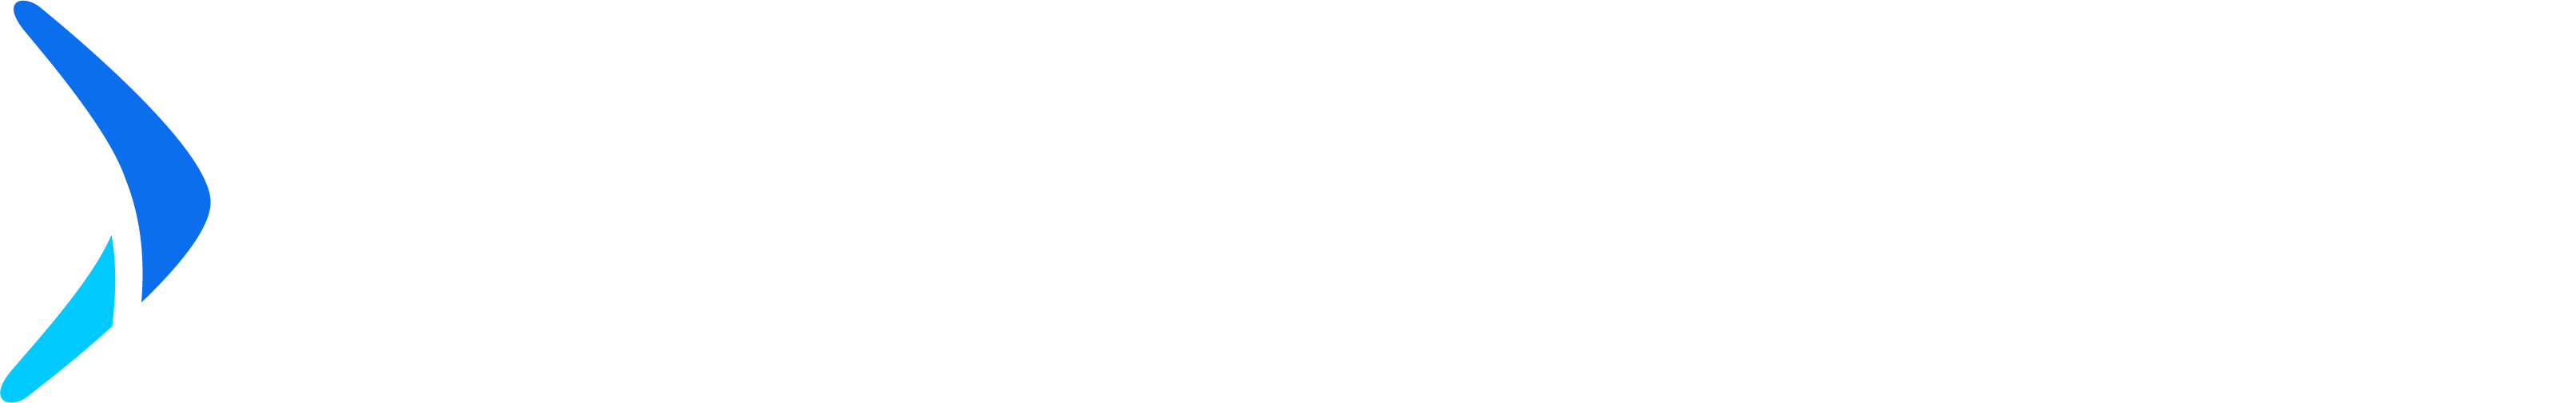 logo_sales-boomerange-white